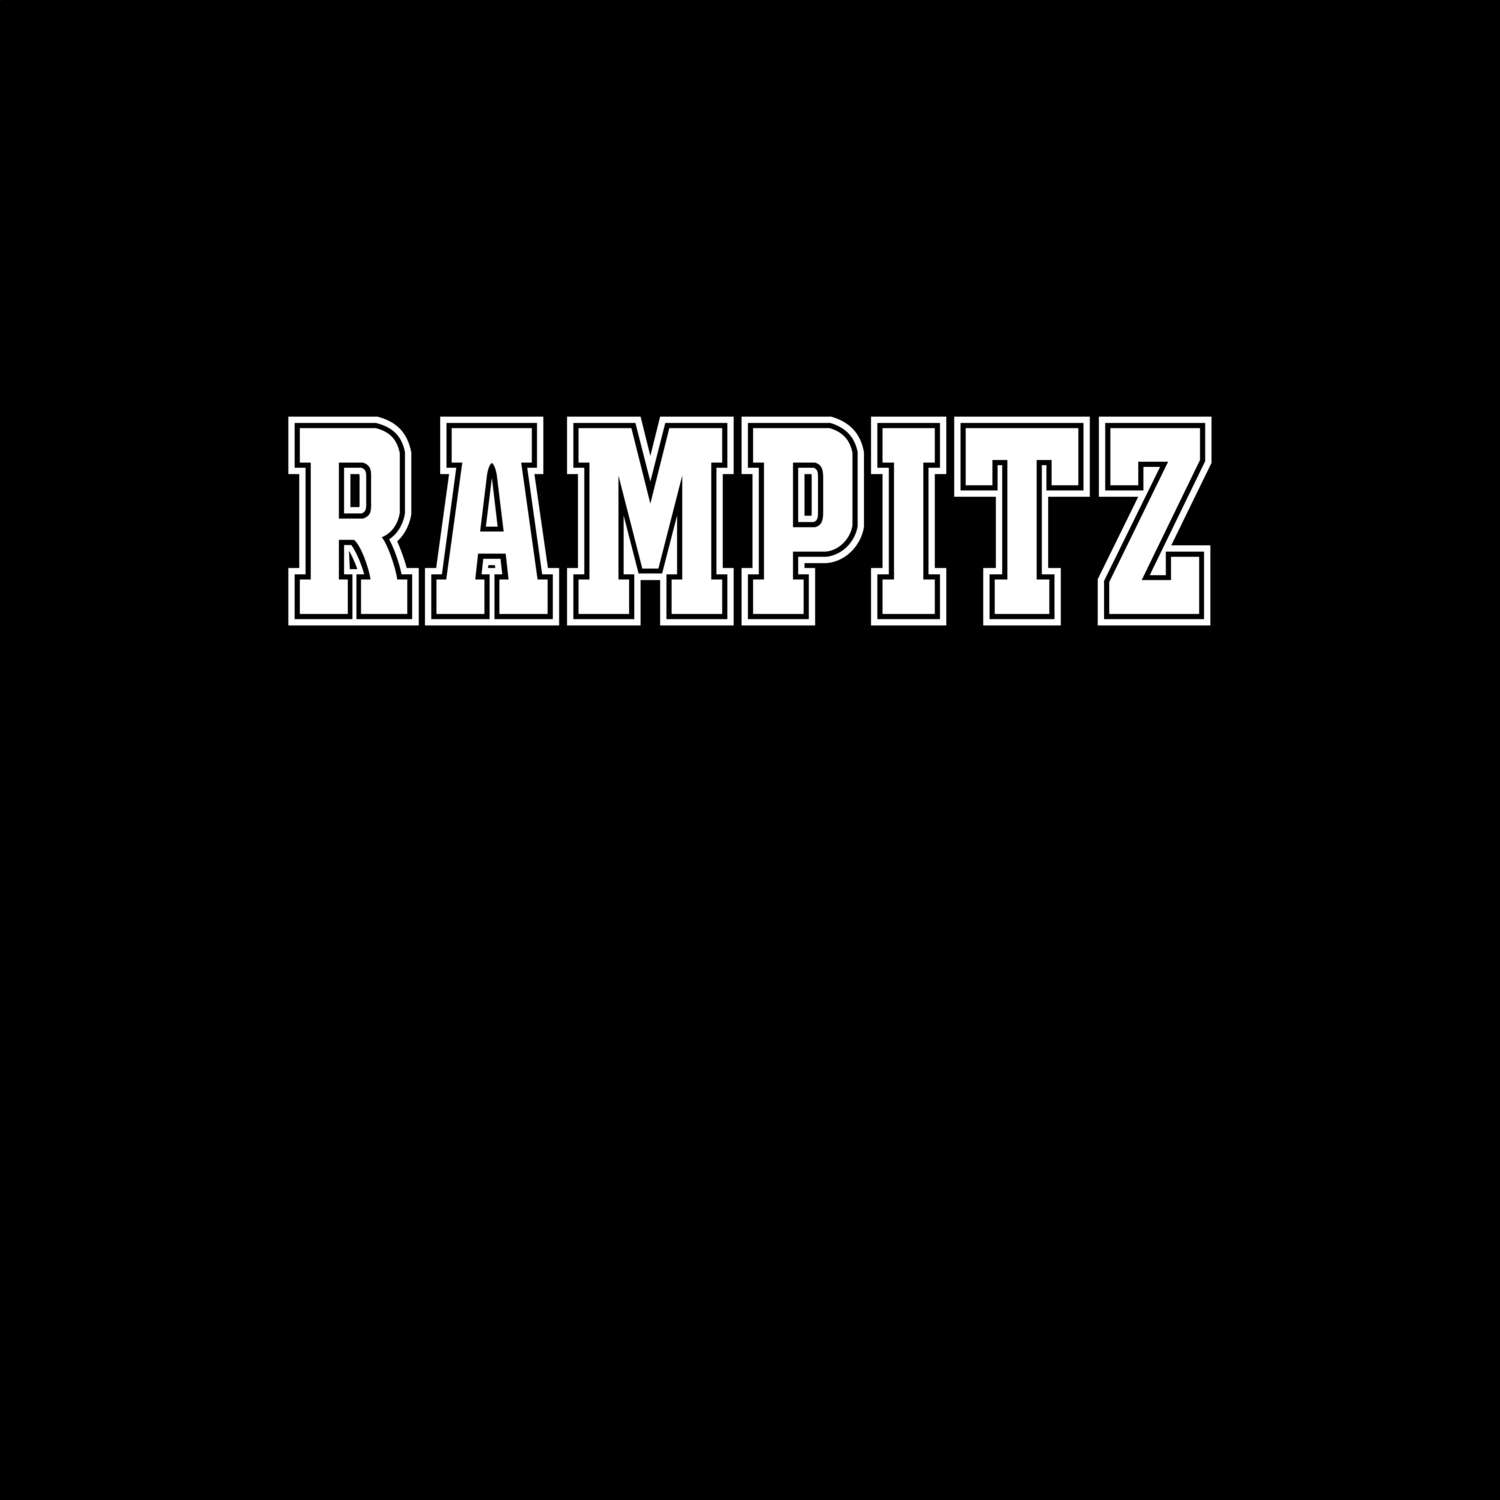 Rampitz T-Shirt »Classic«